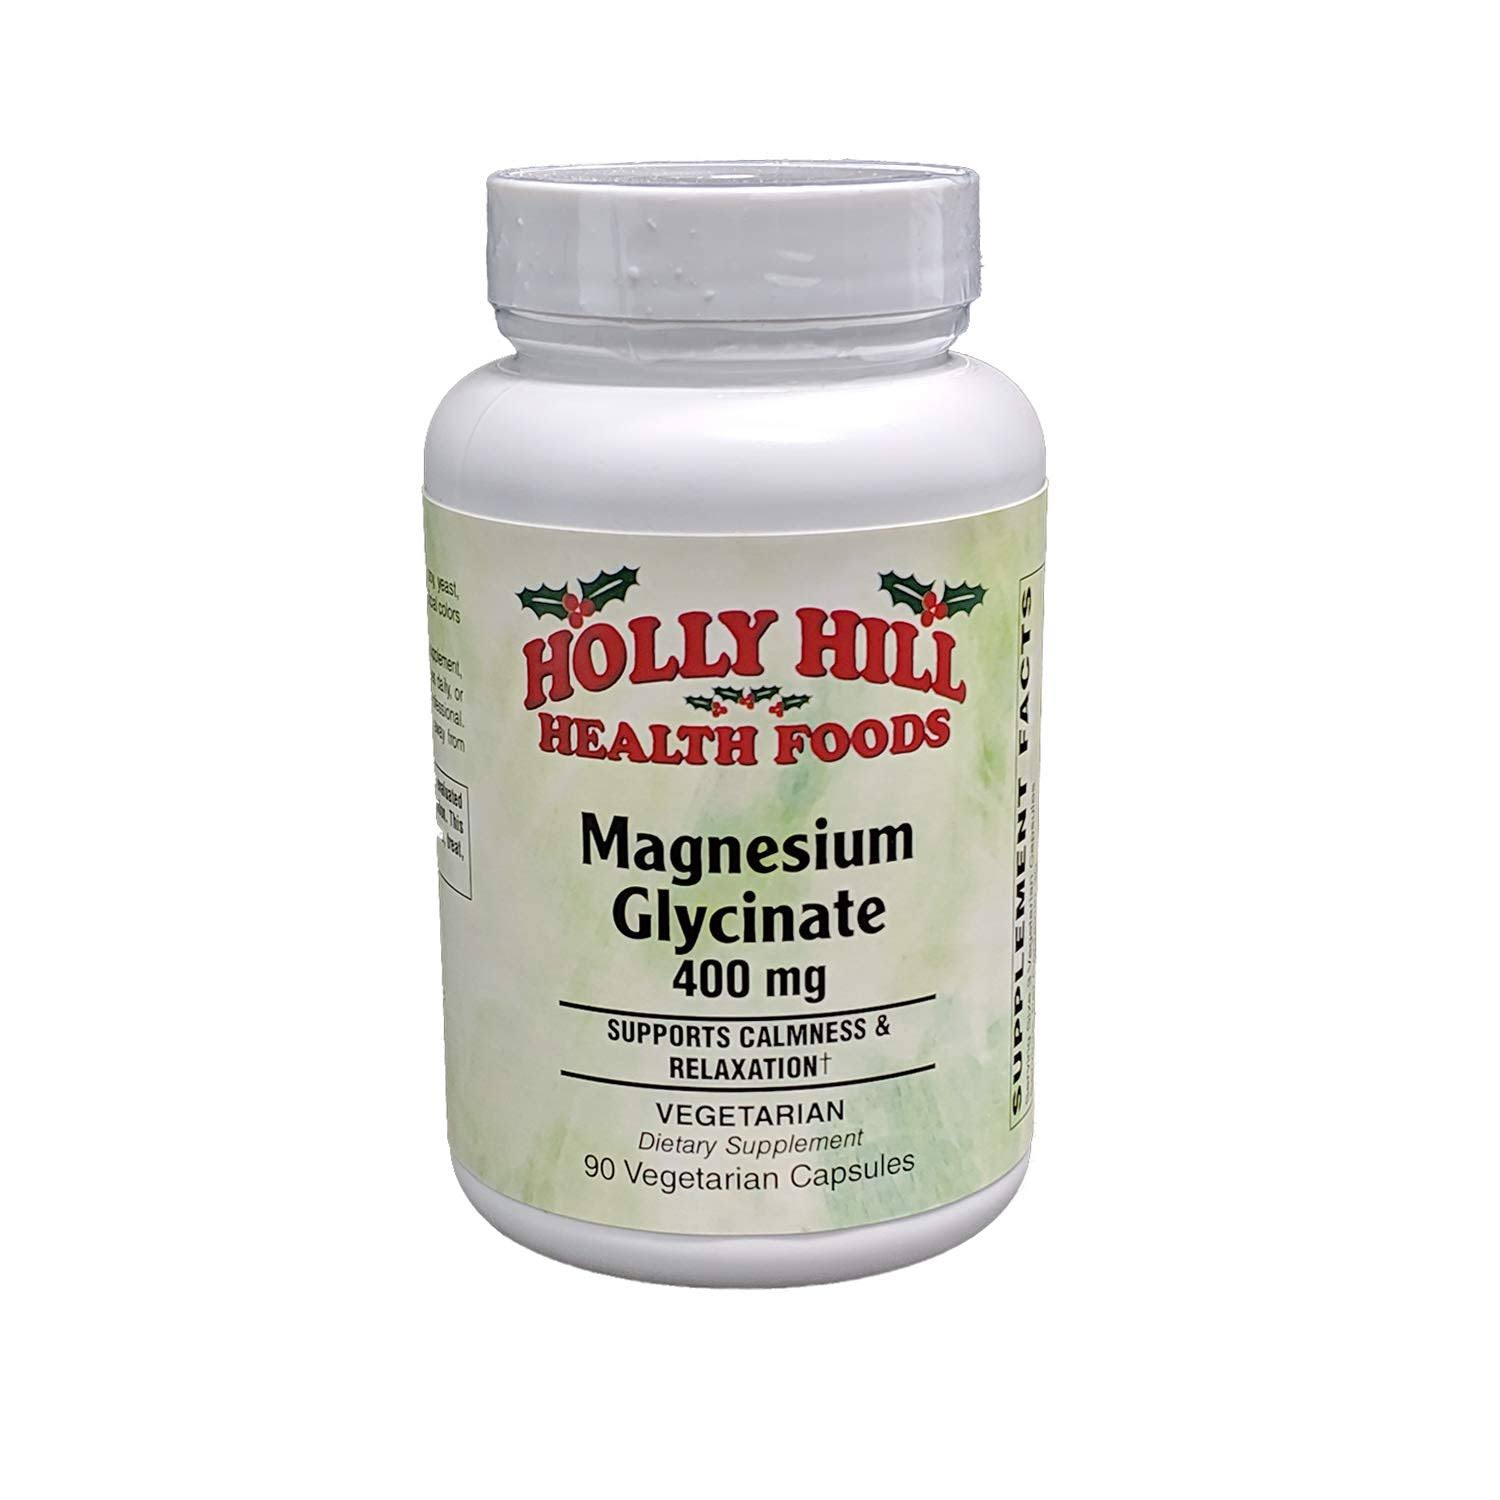 Holly Hill Health Foods Magnesium Glycinate 400mg, 90 Vegetarian Capsu